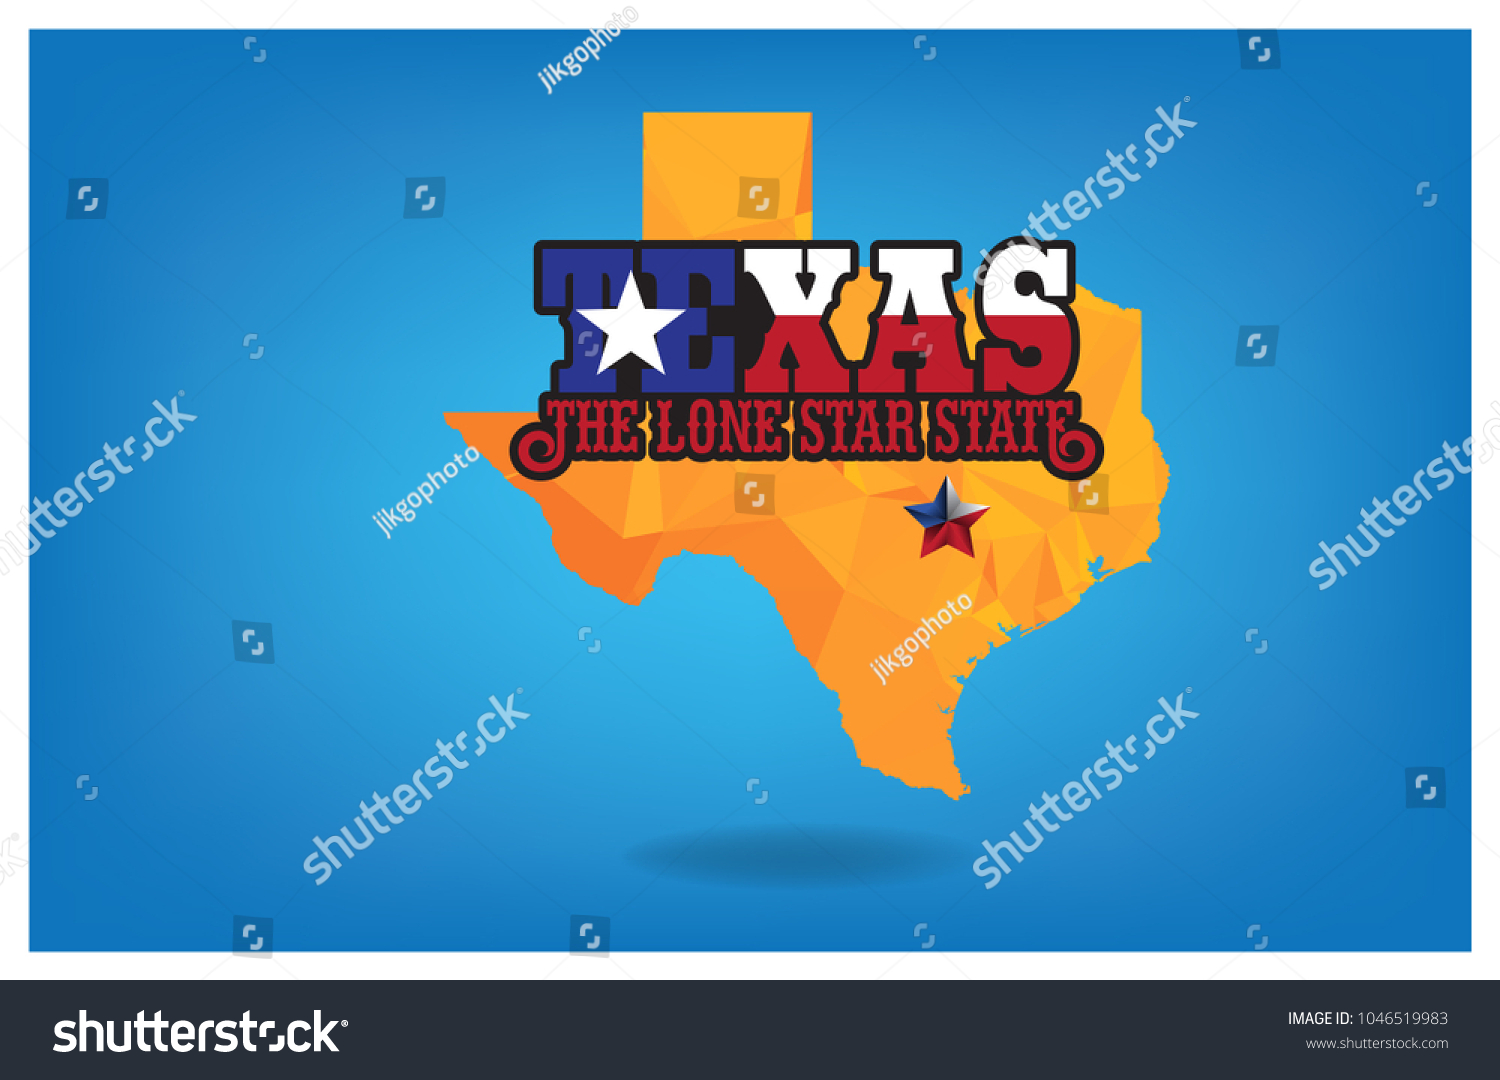 texas-nickname-lone-star-state-map-stock-vektorgrafik-lizenzfrei